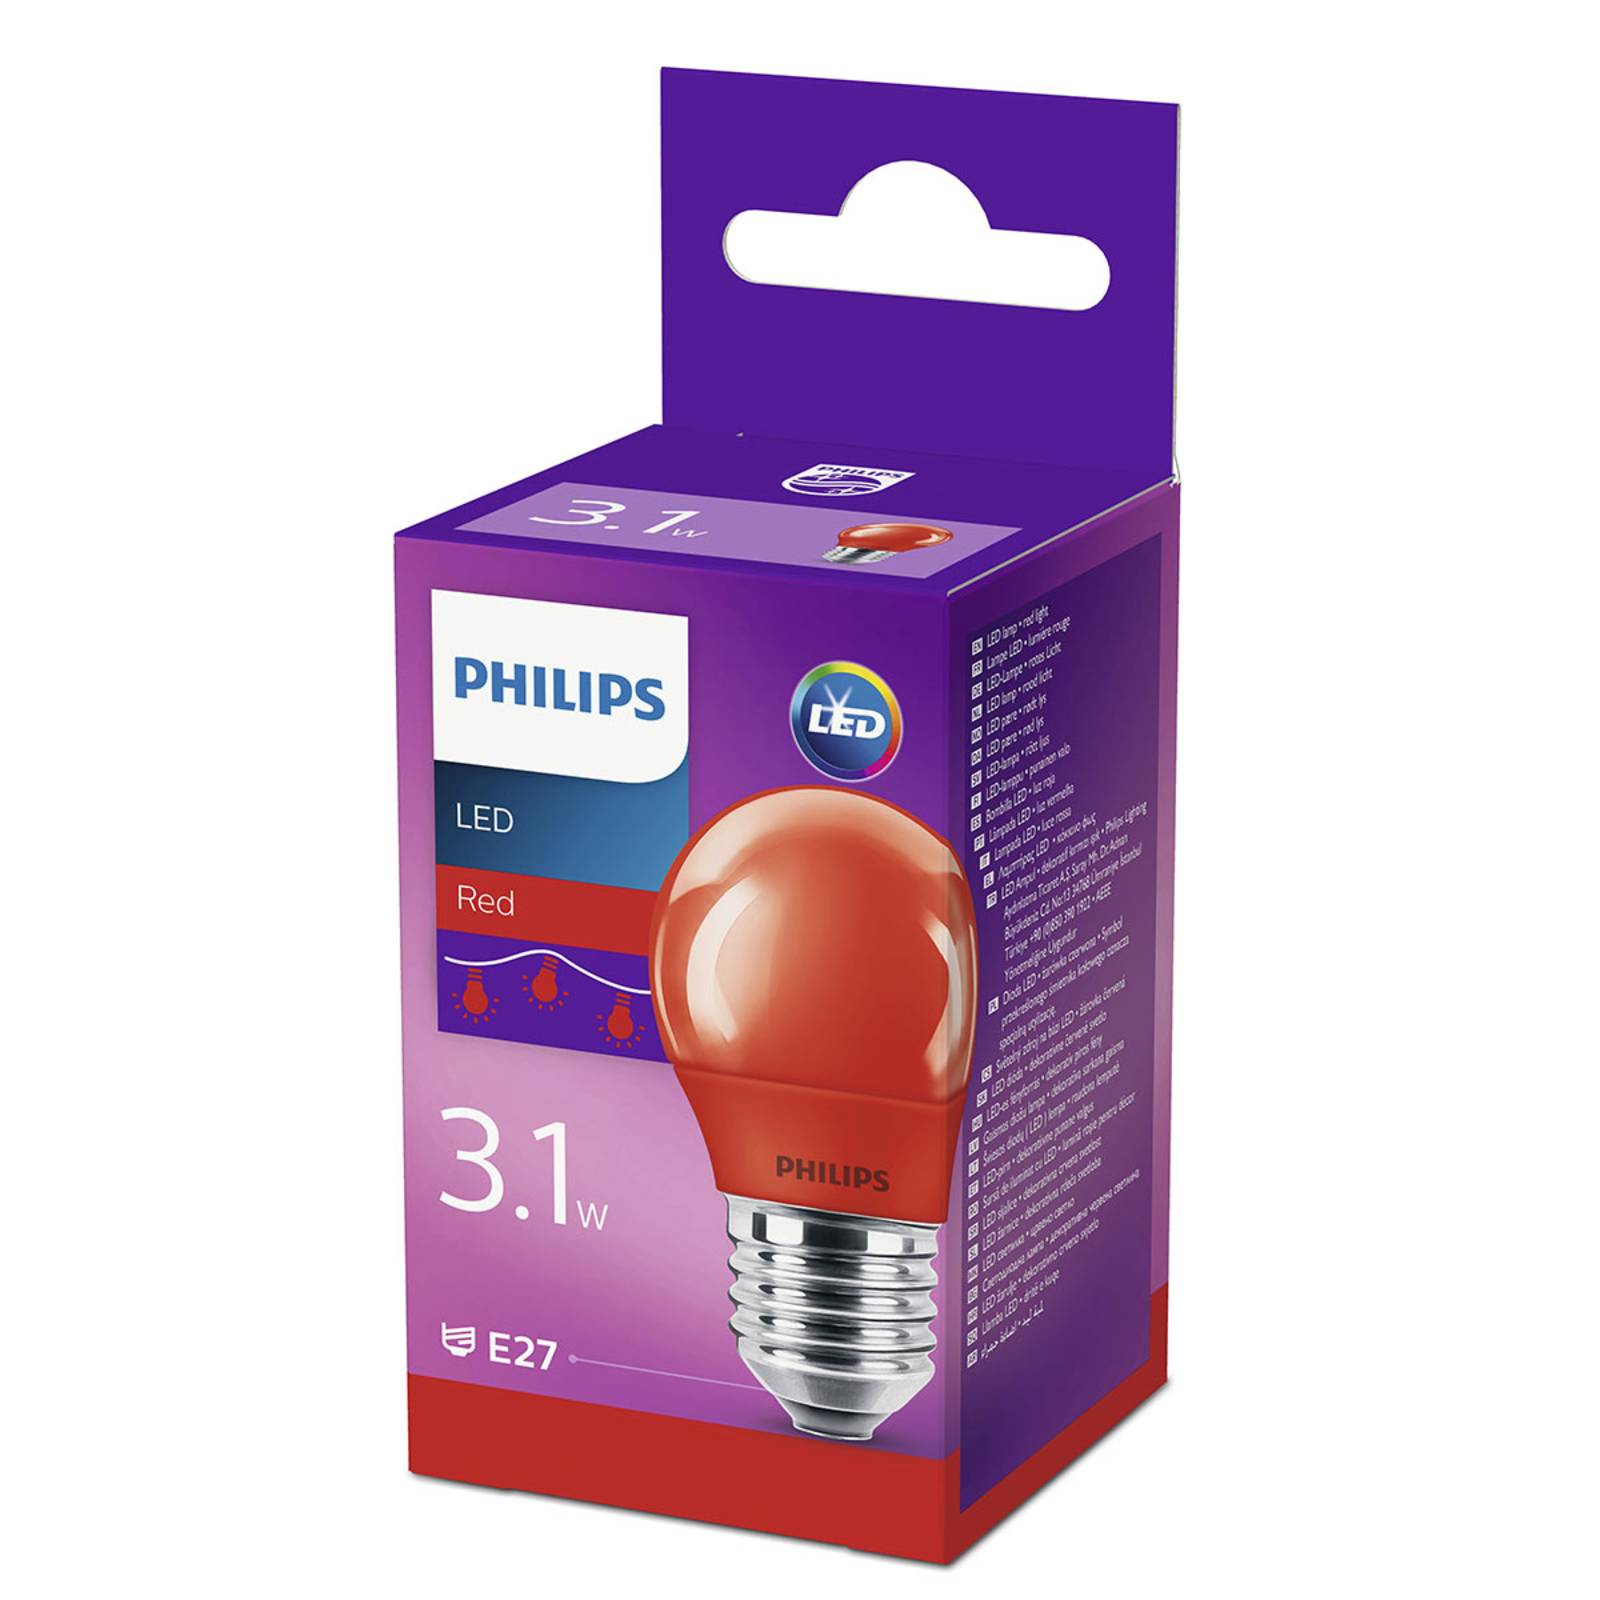 Philips E27 P45 LED-Lampe 3,1W, rot